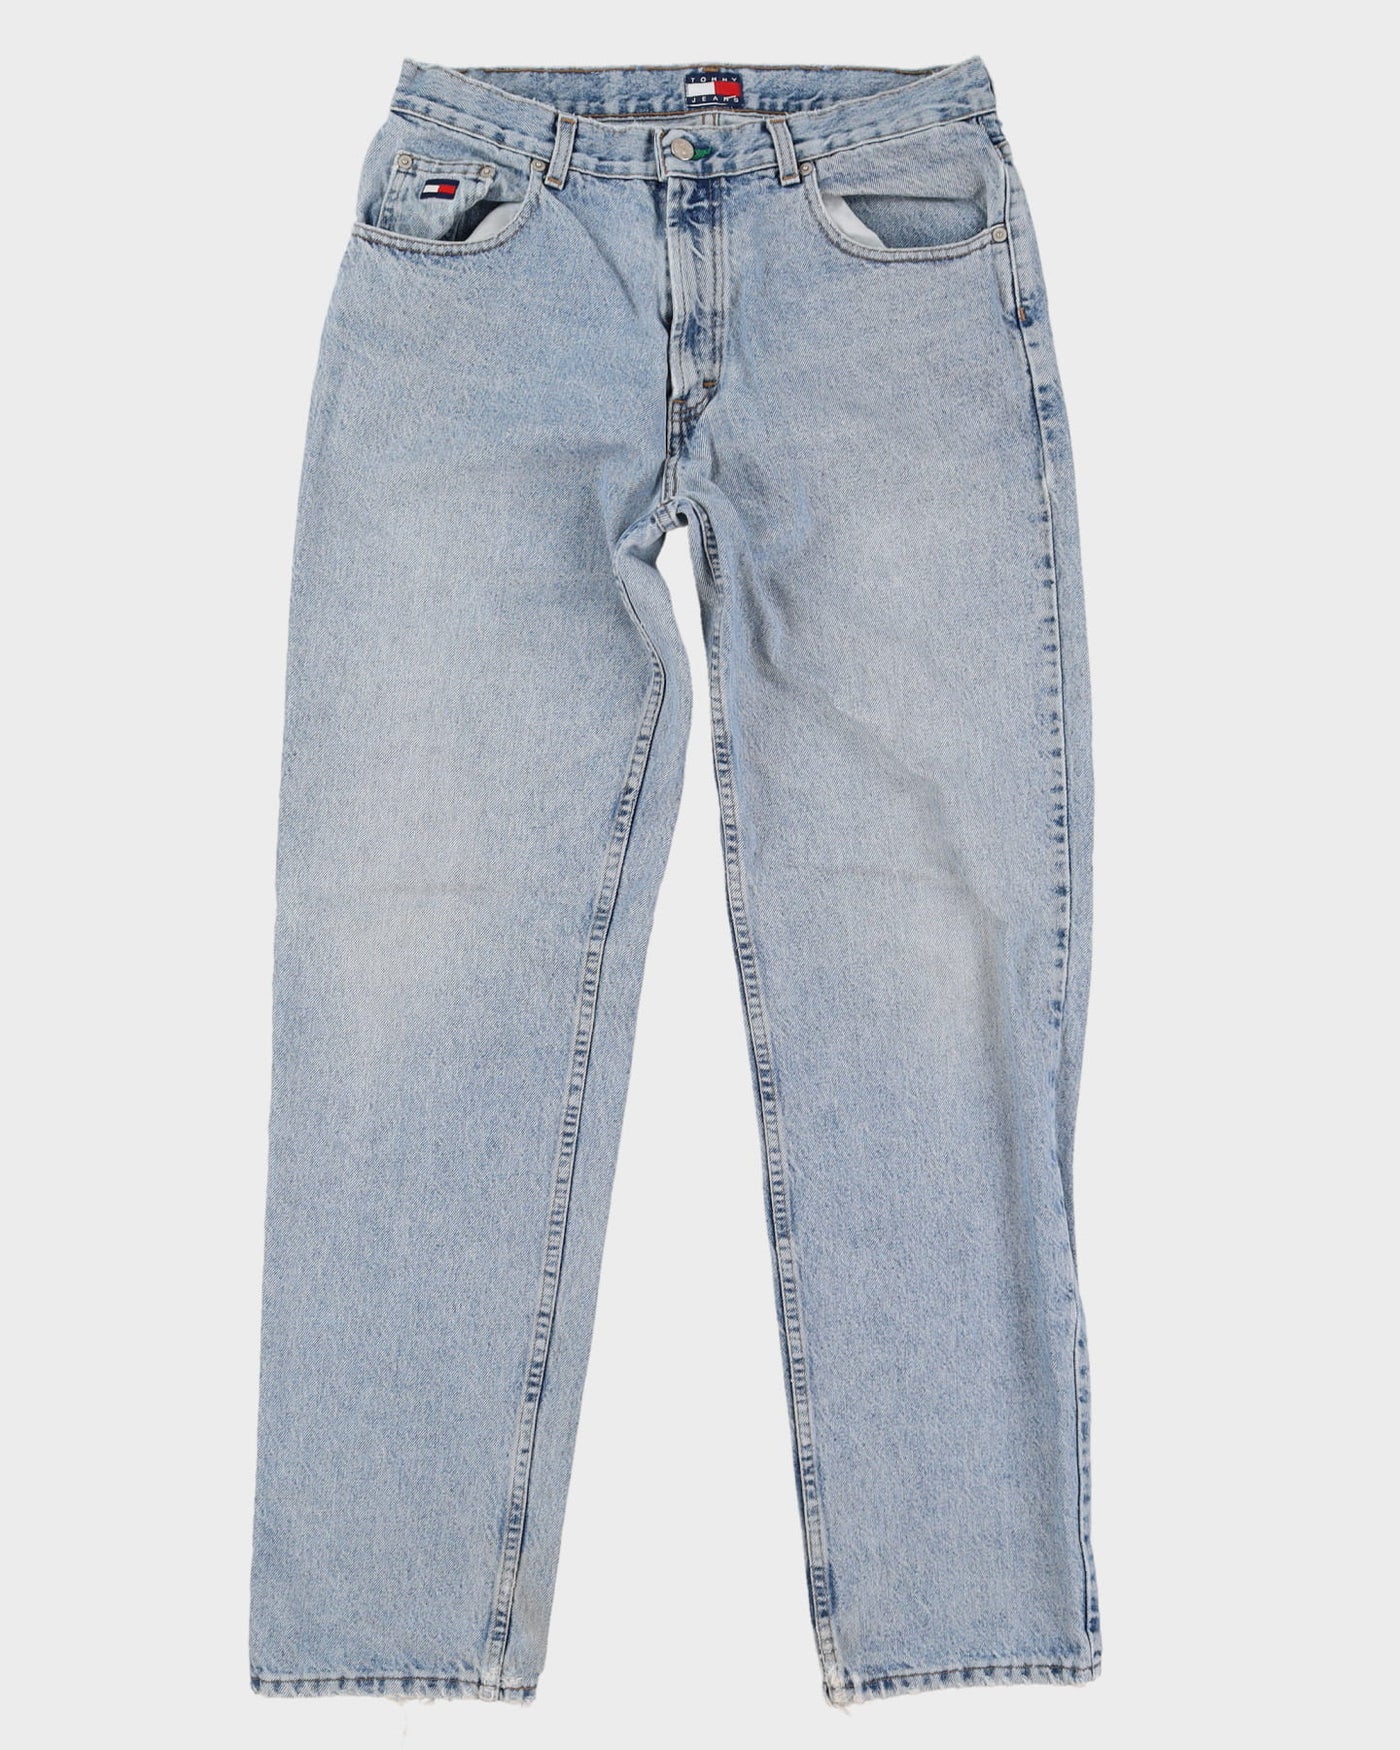 Vintage 90s Tommy Hilfiger Jeans - W34 L34